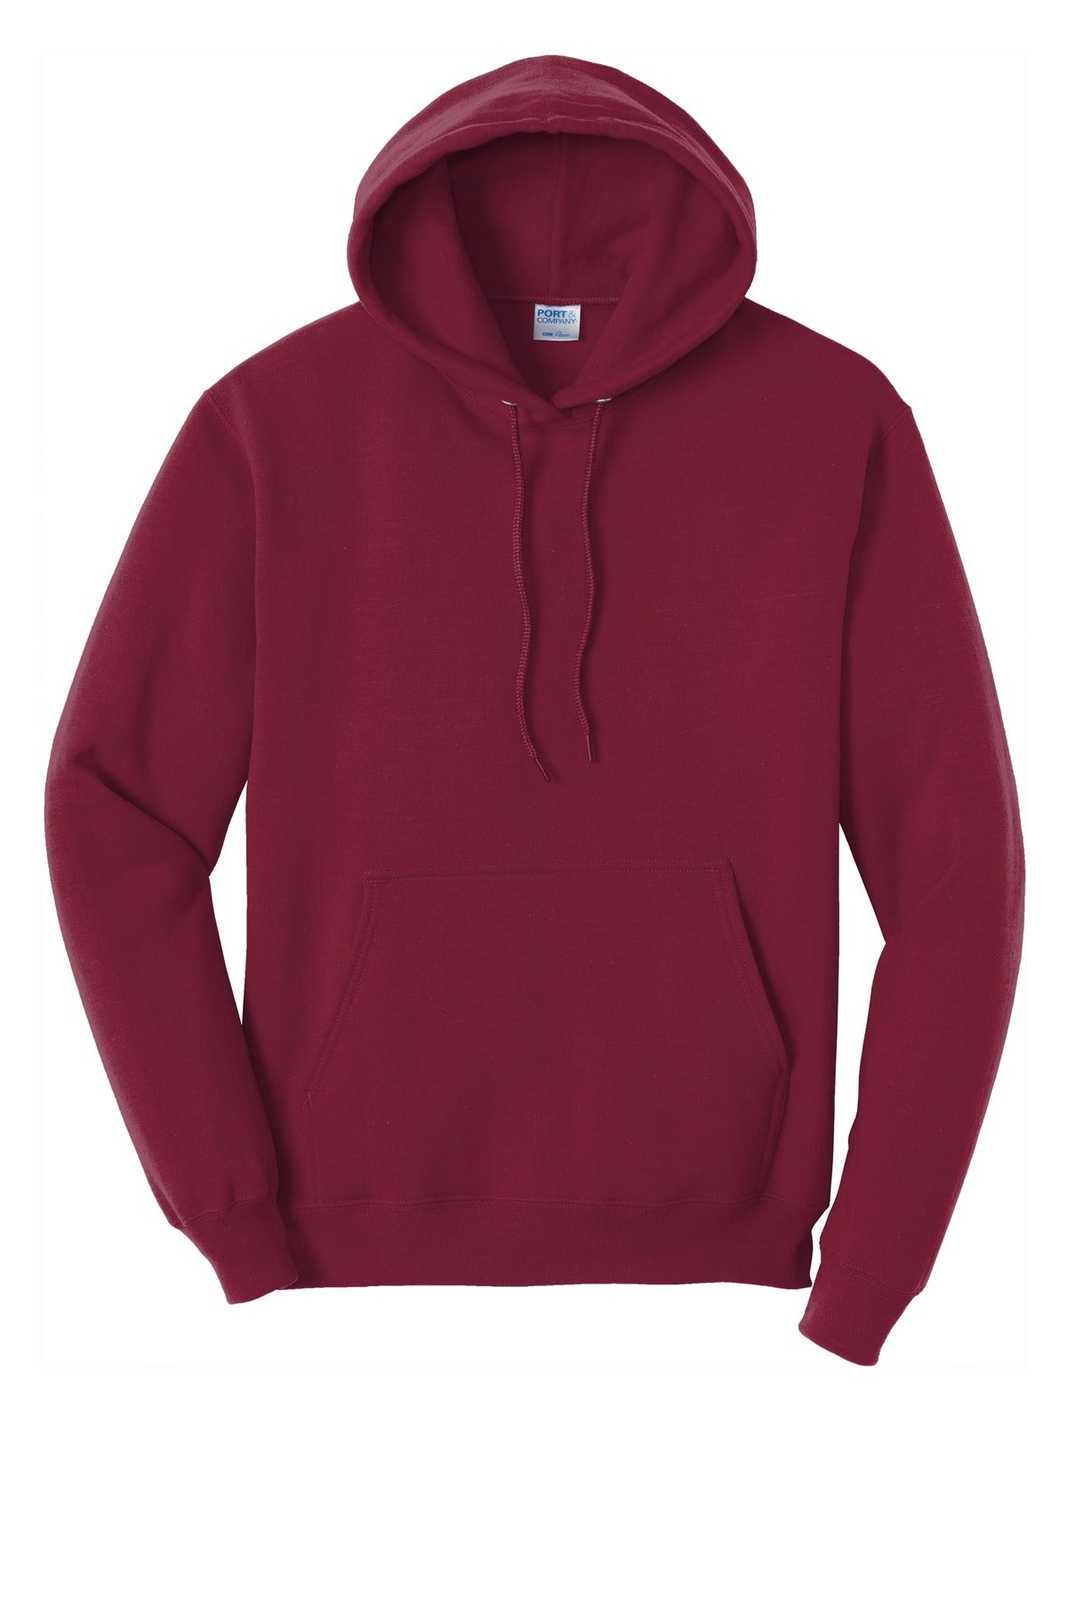 Port &amp; Company PC78H Core Fleece Pullover Hooded Sweatshirt - Cardinal - HIT a Double - 5